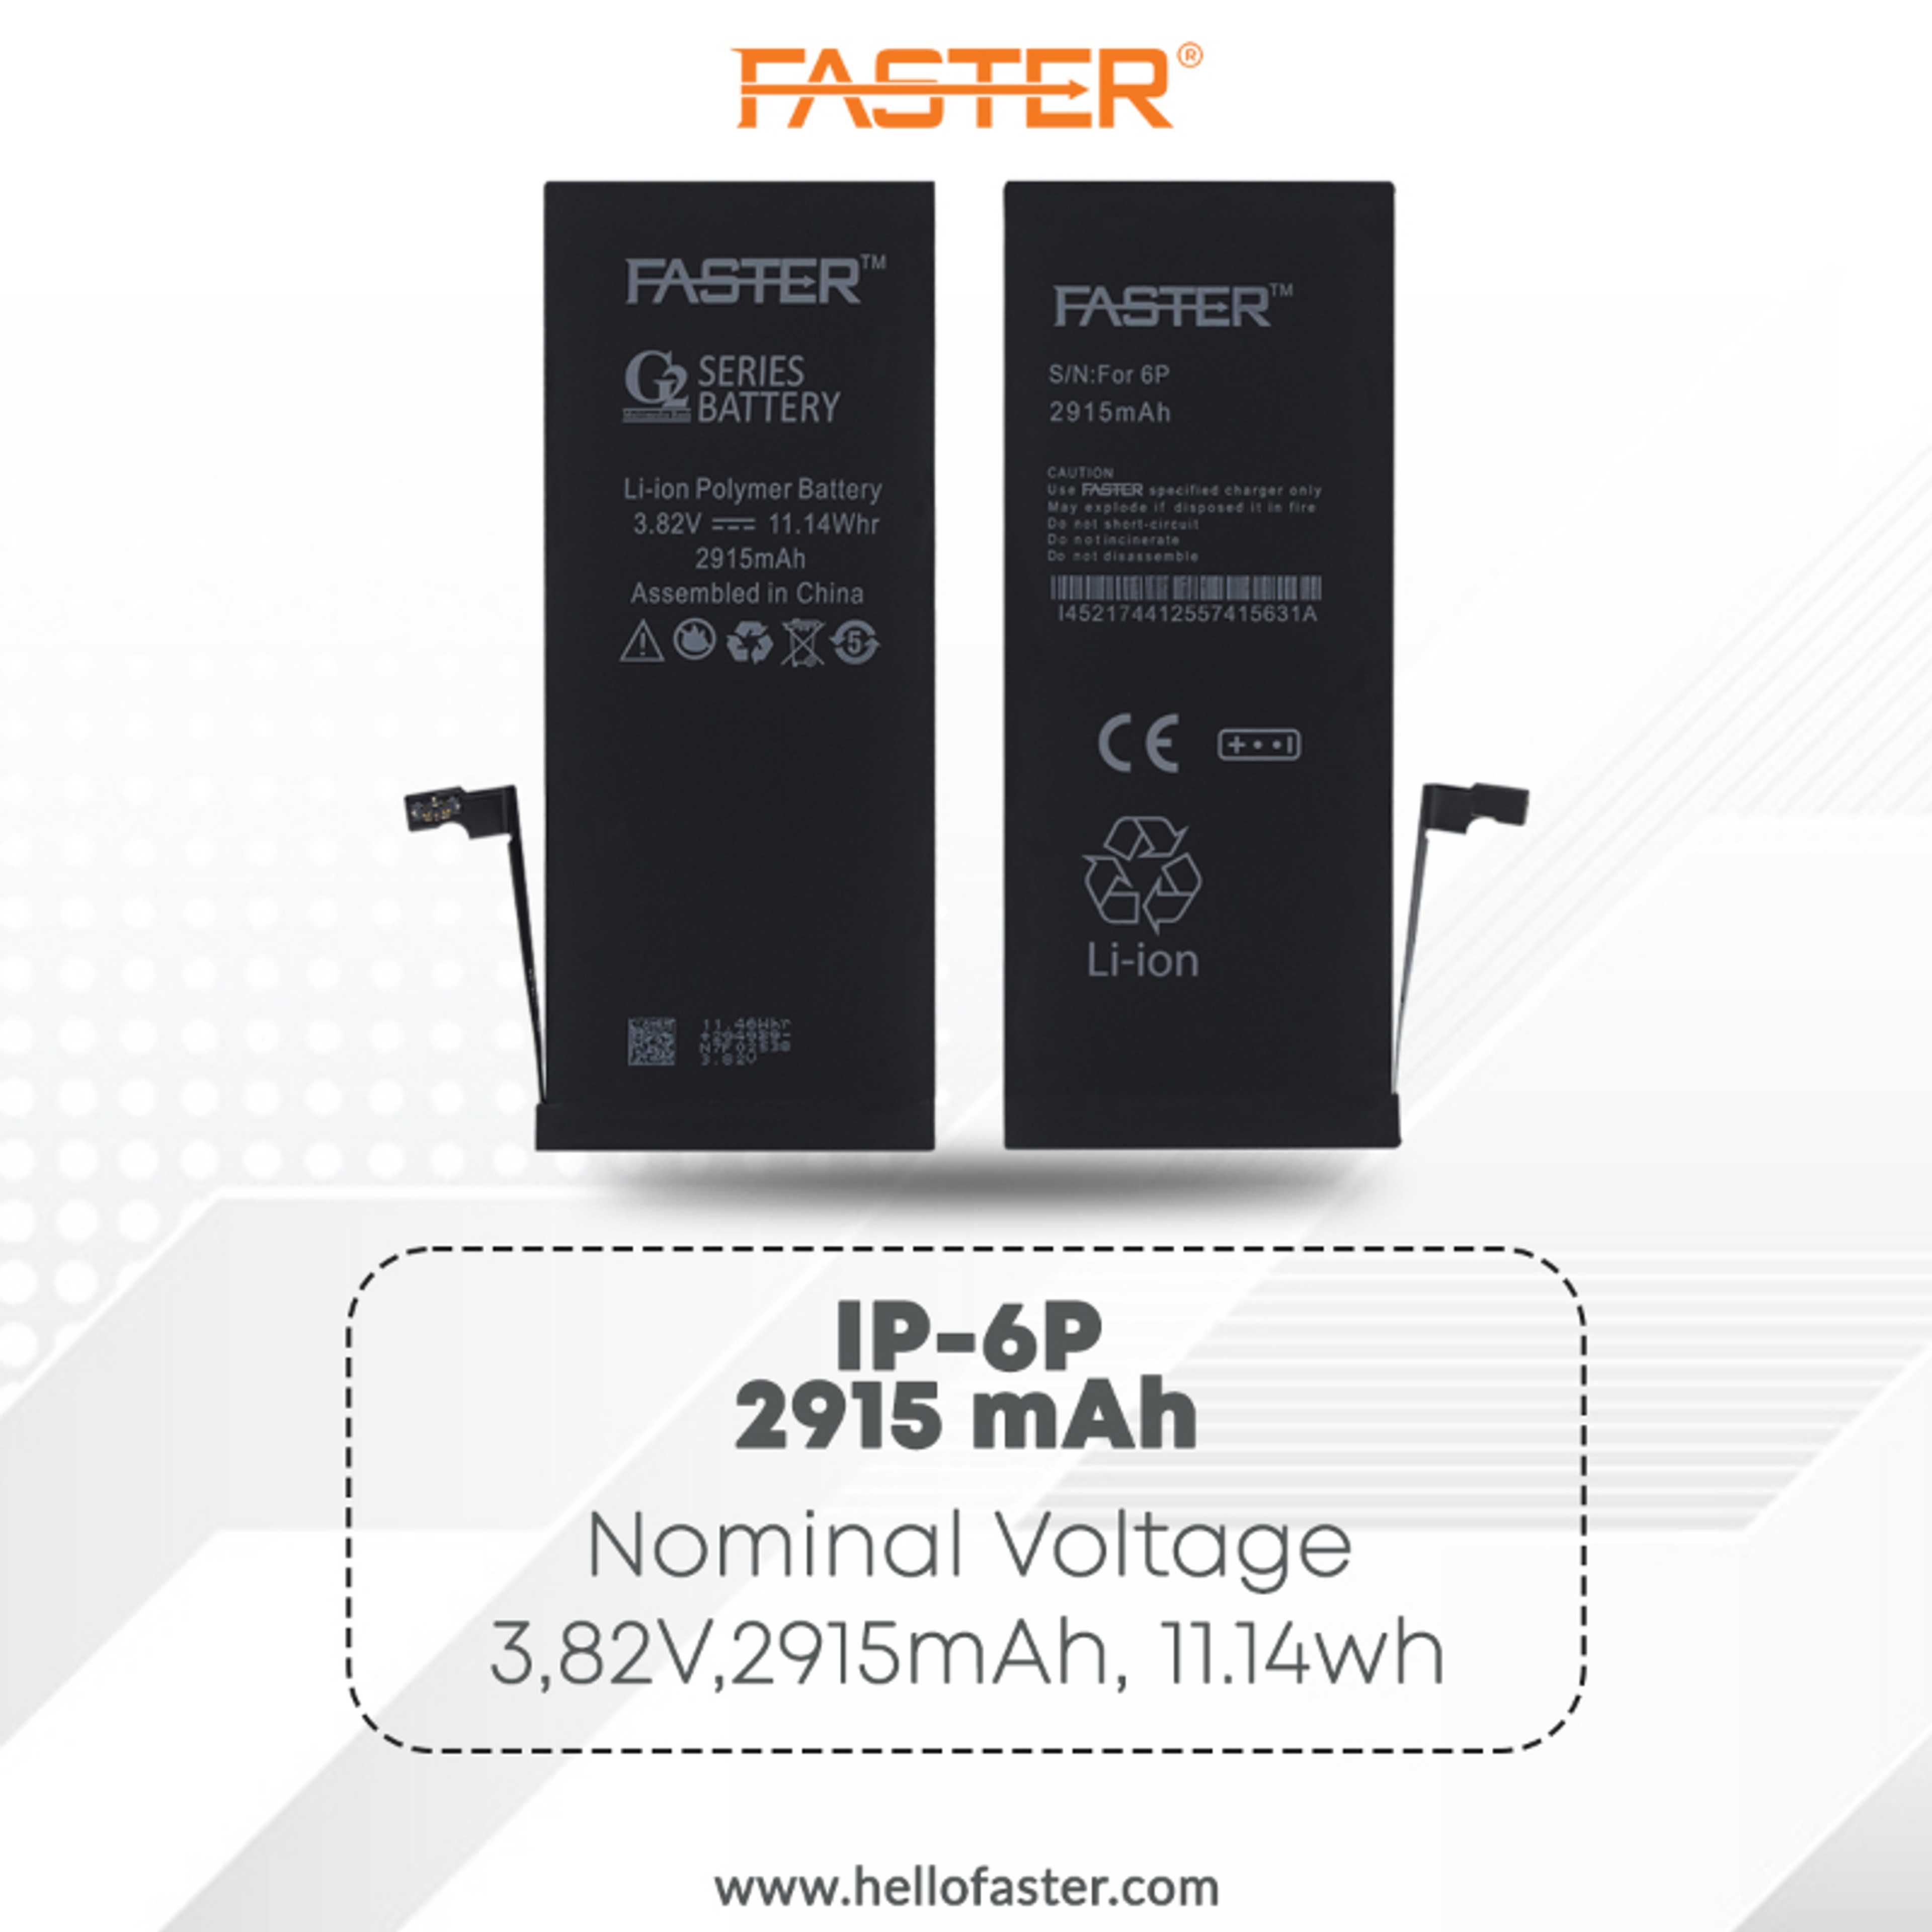 Faster Iphone 6 Plus Battery 2915 mAh Capacity - Original Iphone 6P Battery - Li-ion Polymer Battery